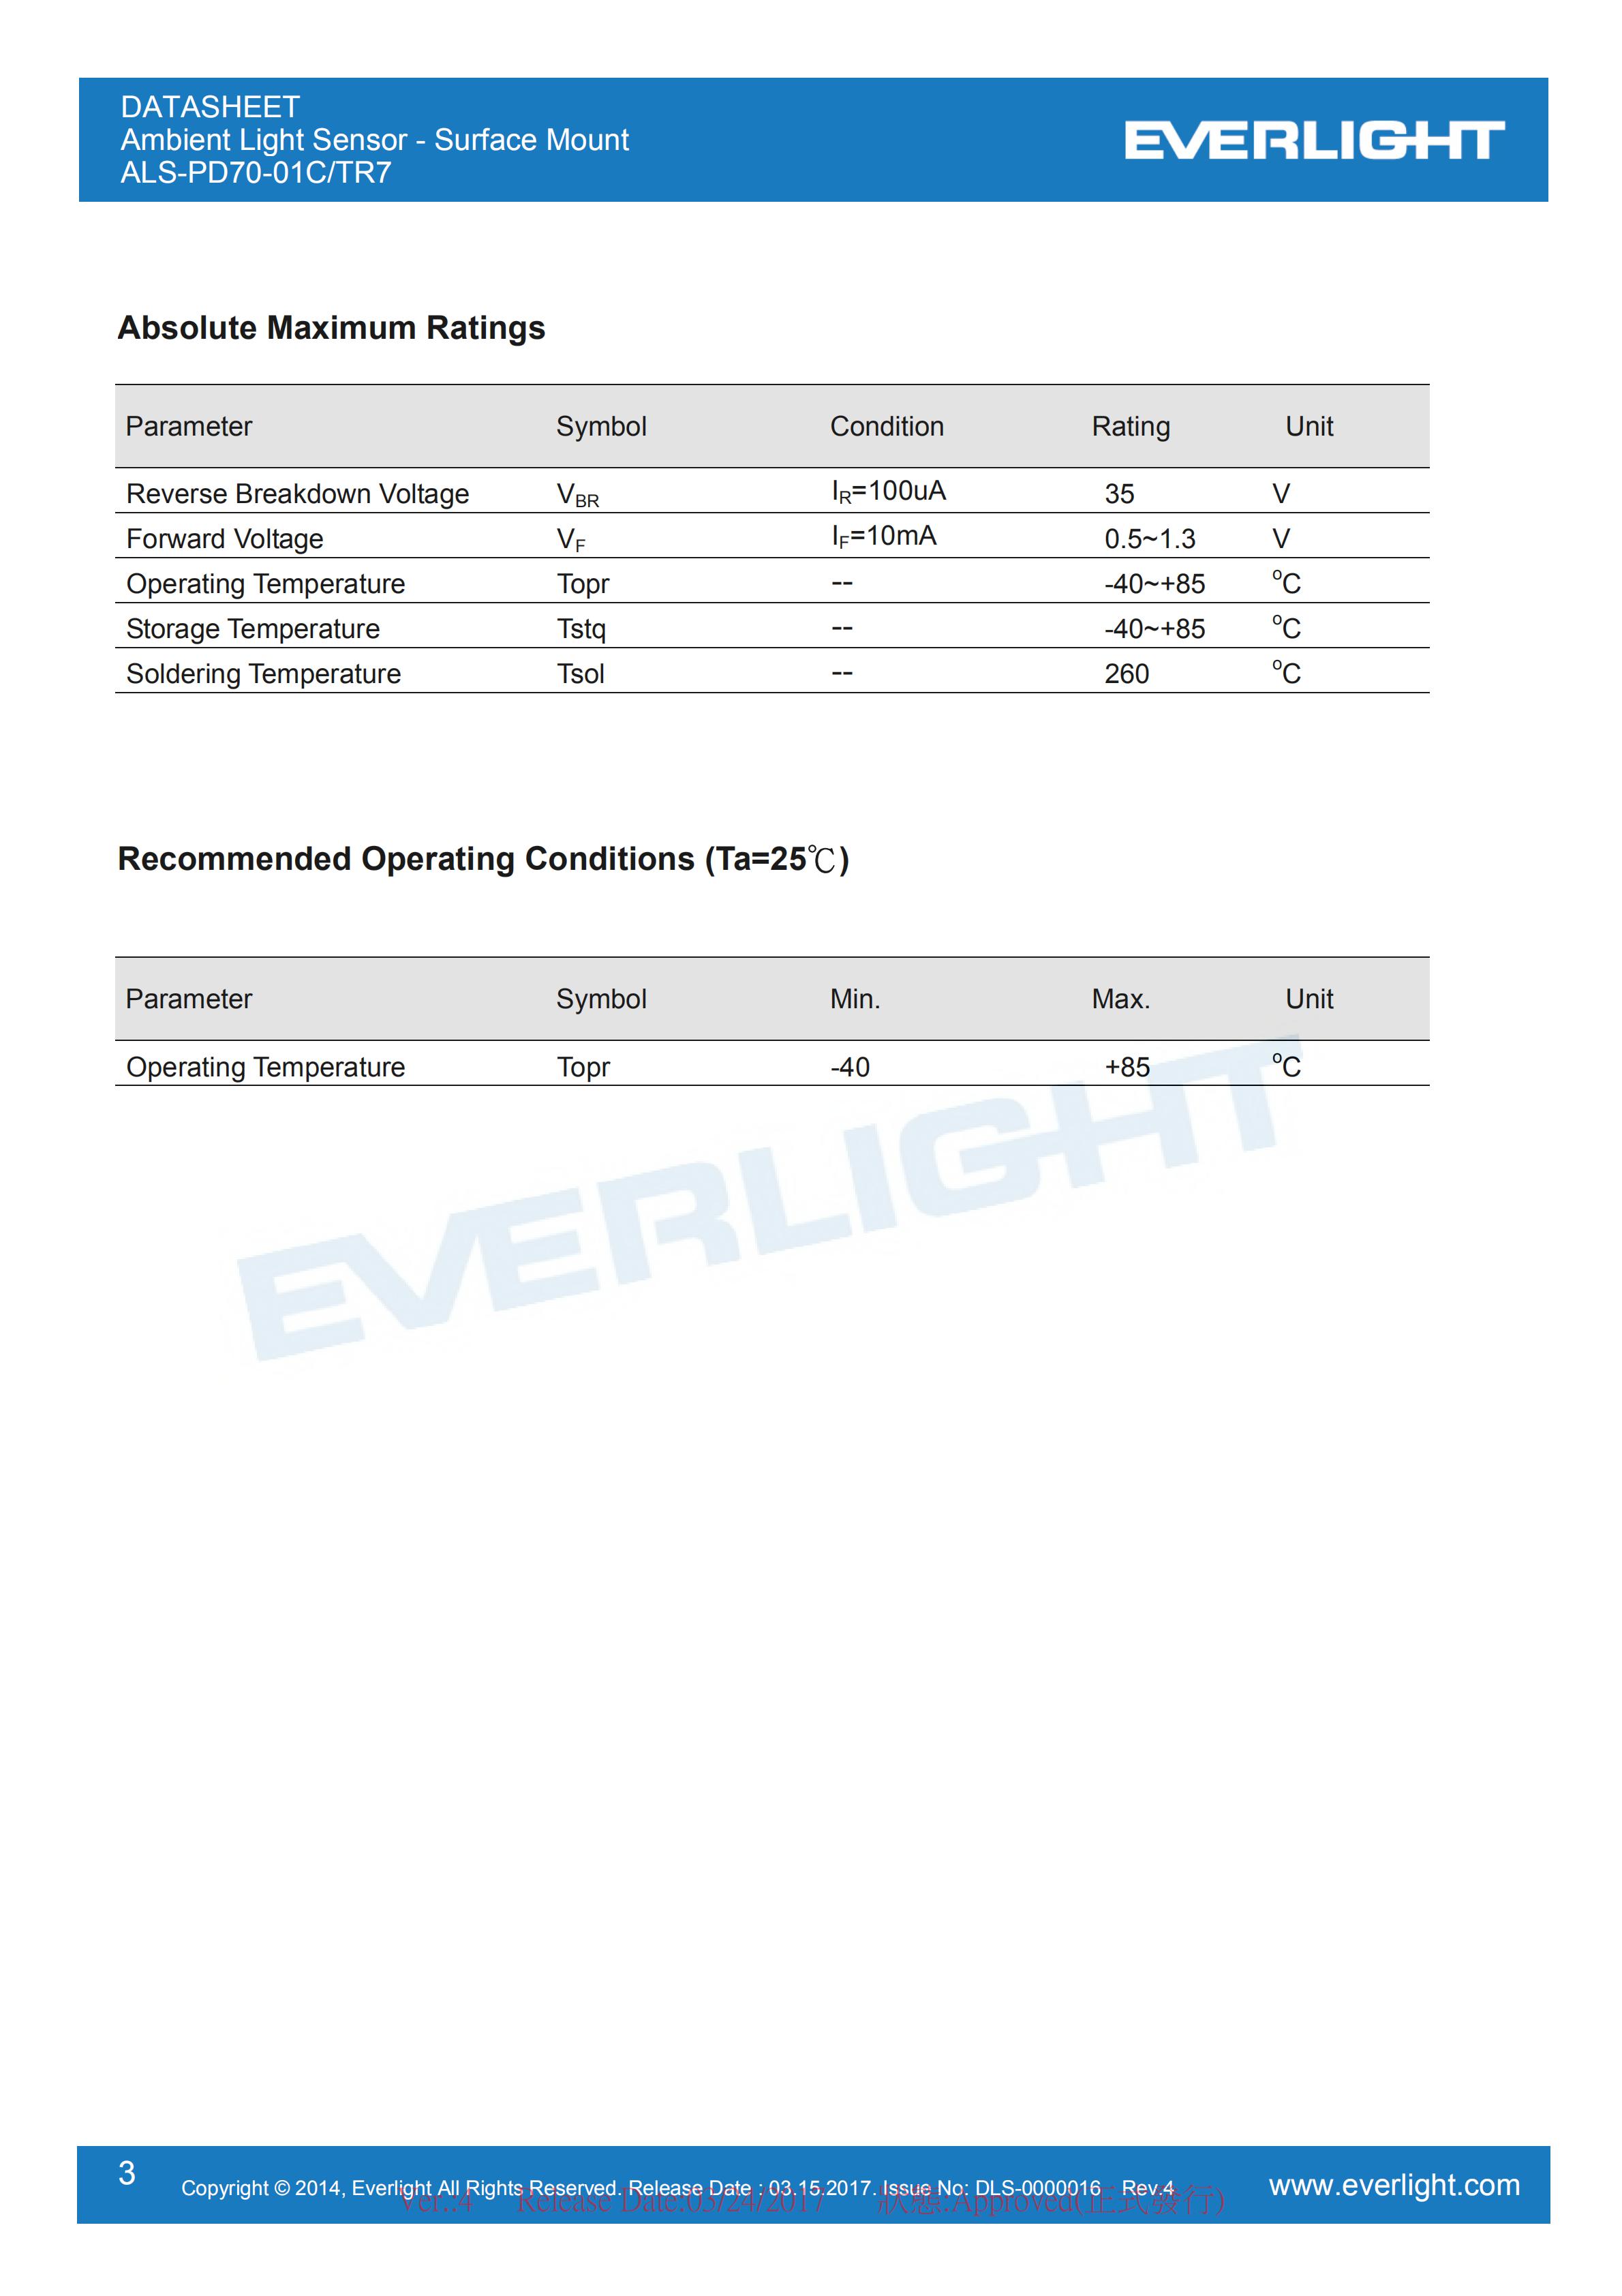 Everlight Ambient Light Sensor ALS-PD70-01C/TR7 Datasheet